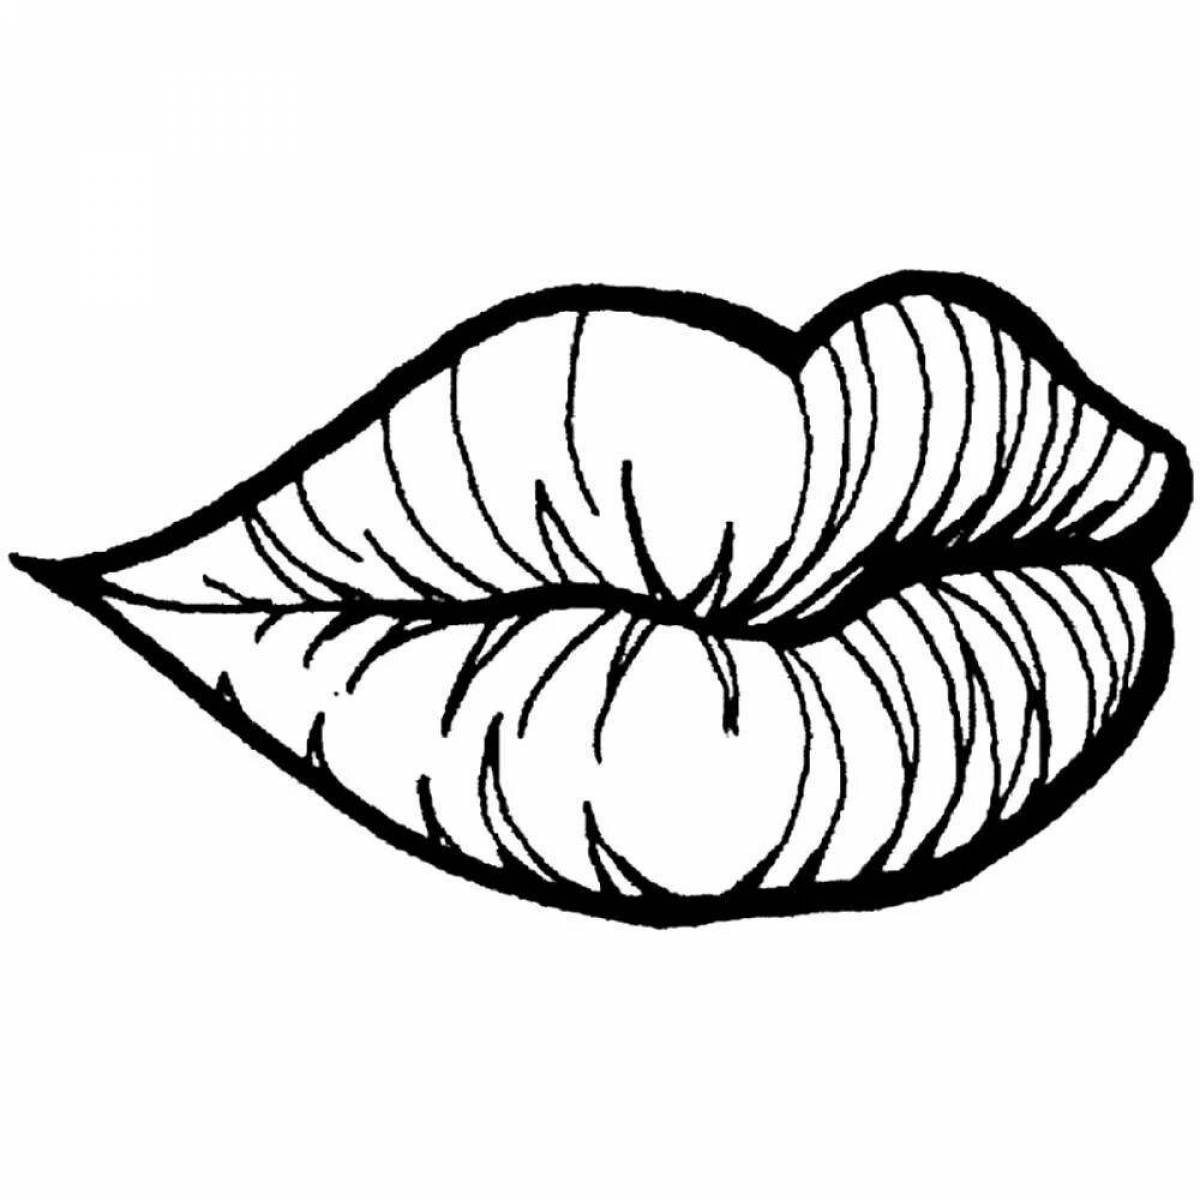 Drawing of glowing lips